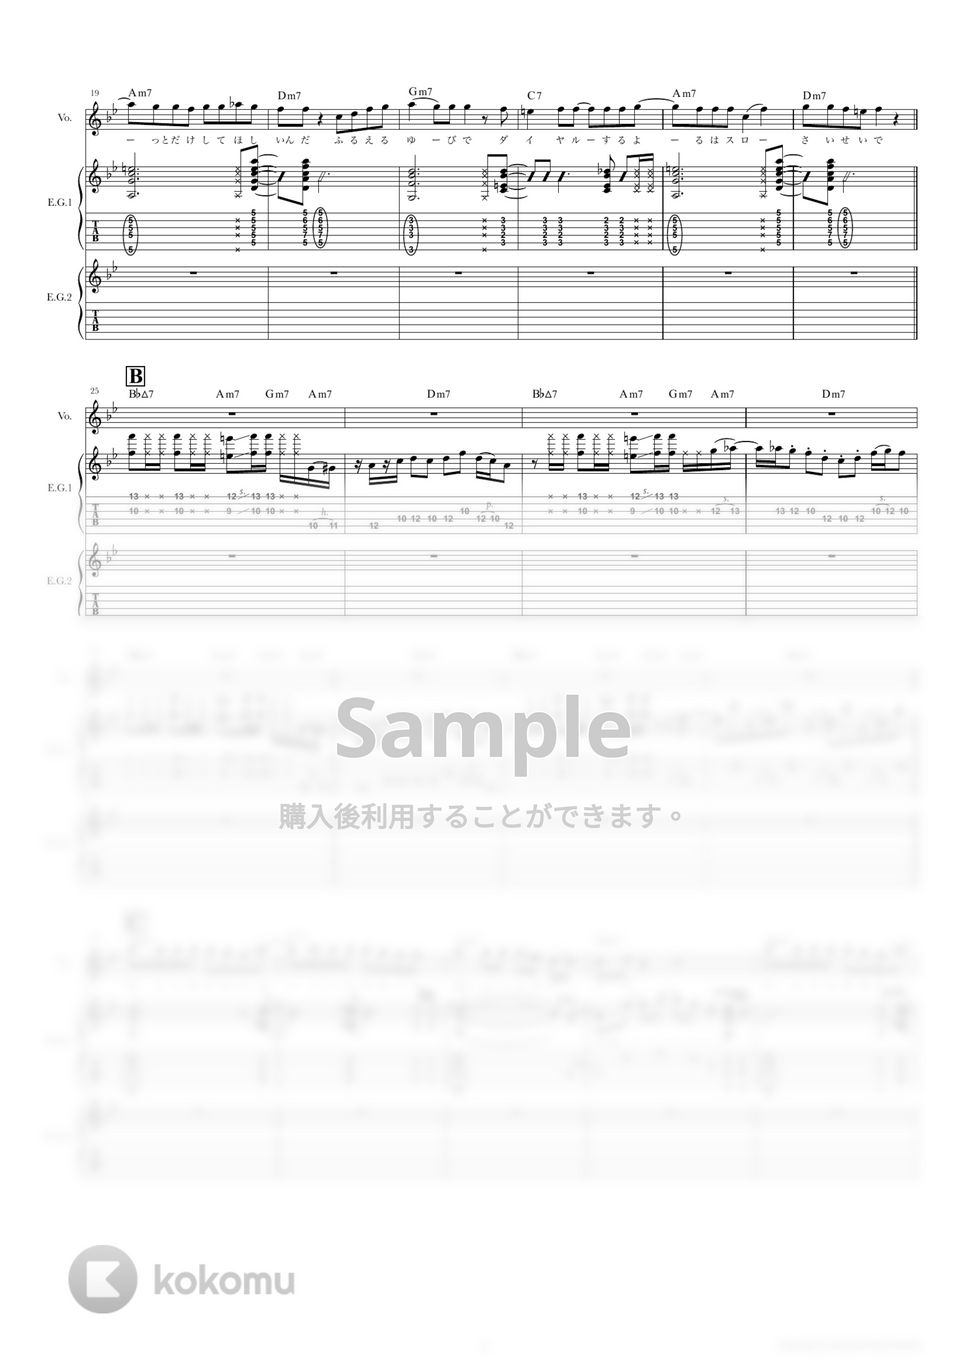 Official髭男dism - SWEET TWEET (ギタースコア・歌詞・コード付き) by TRIAD GUITAR SCHOOL